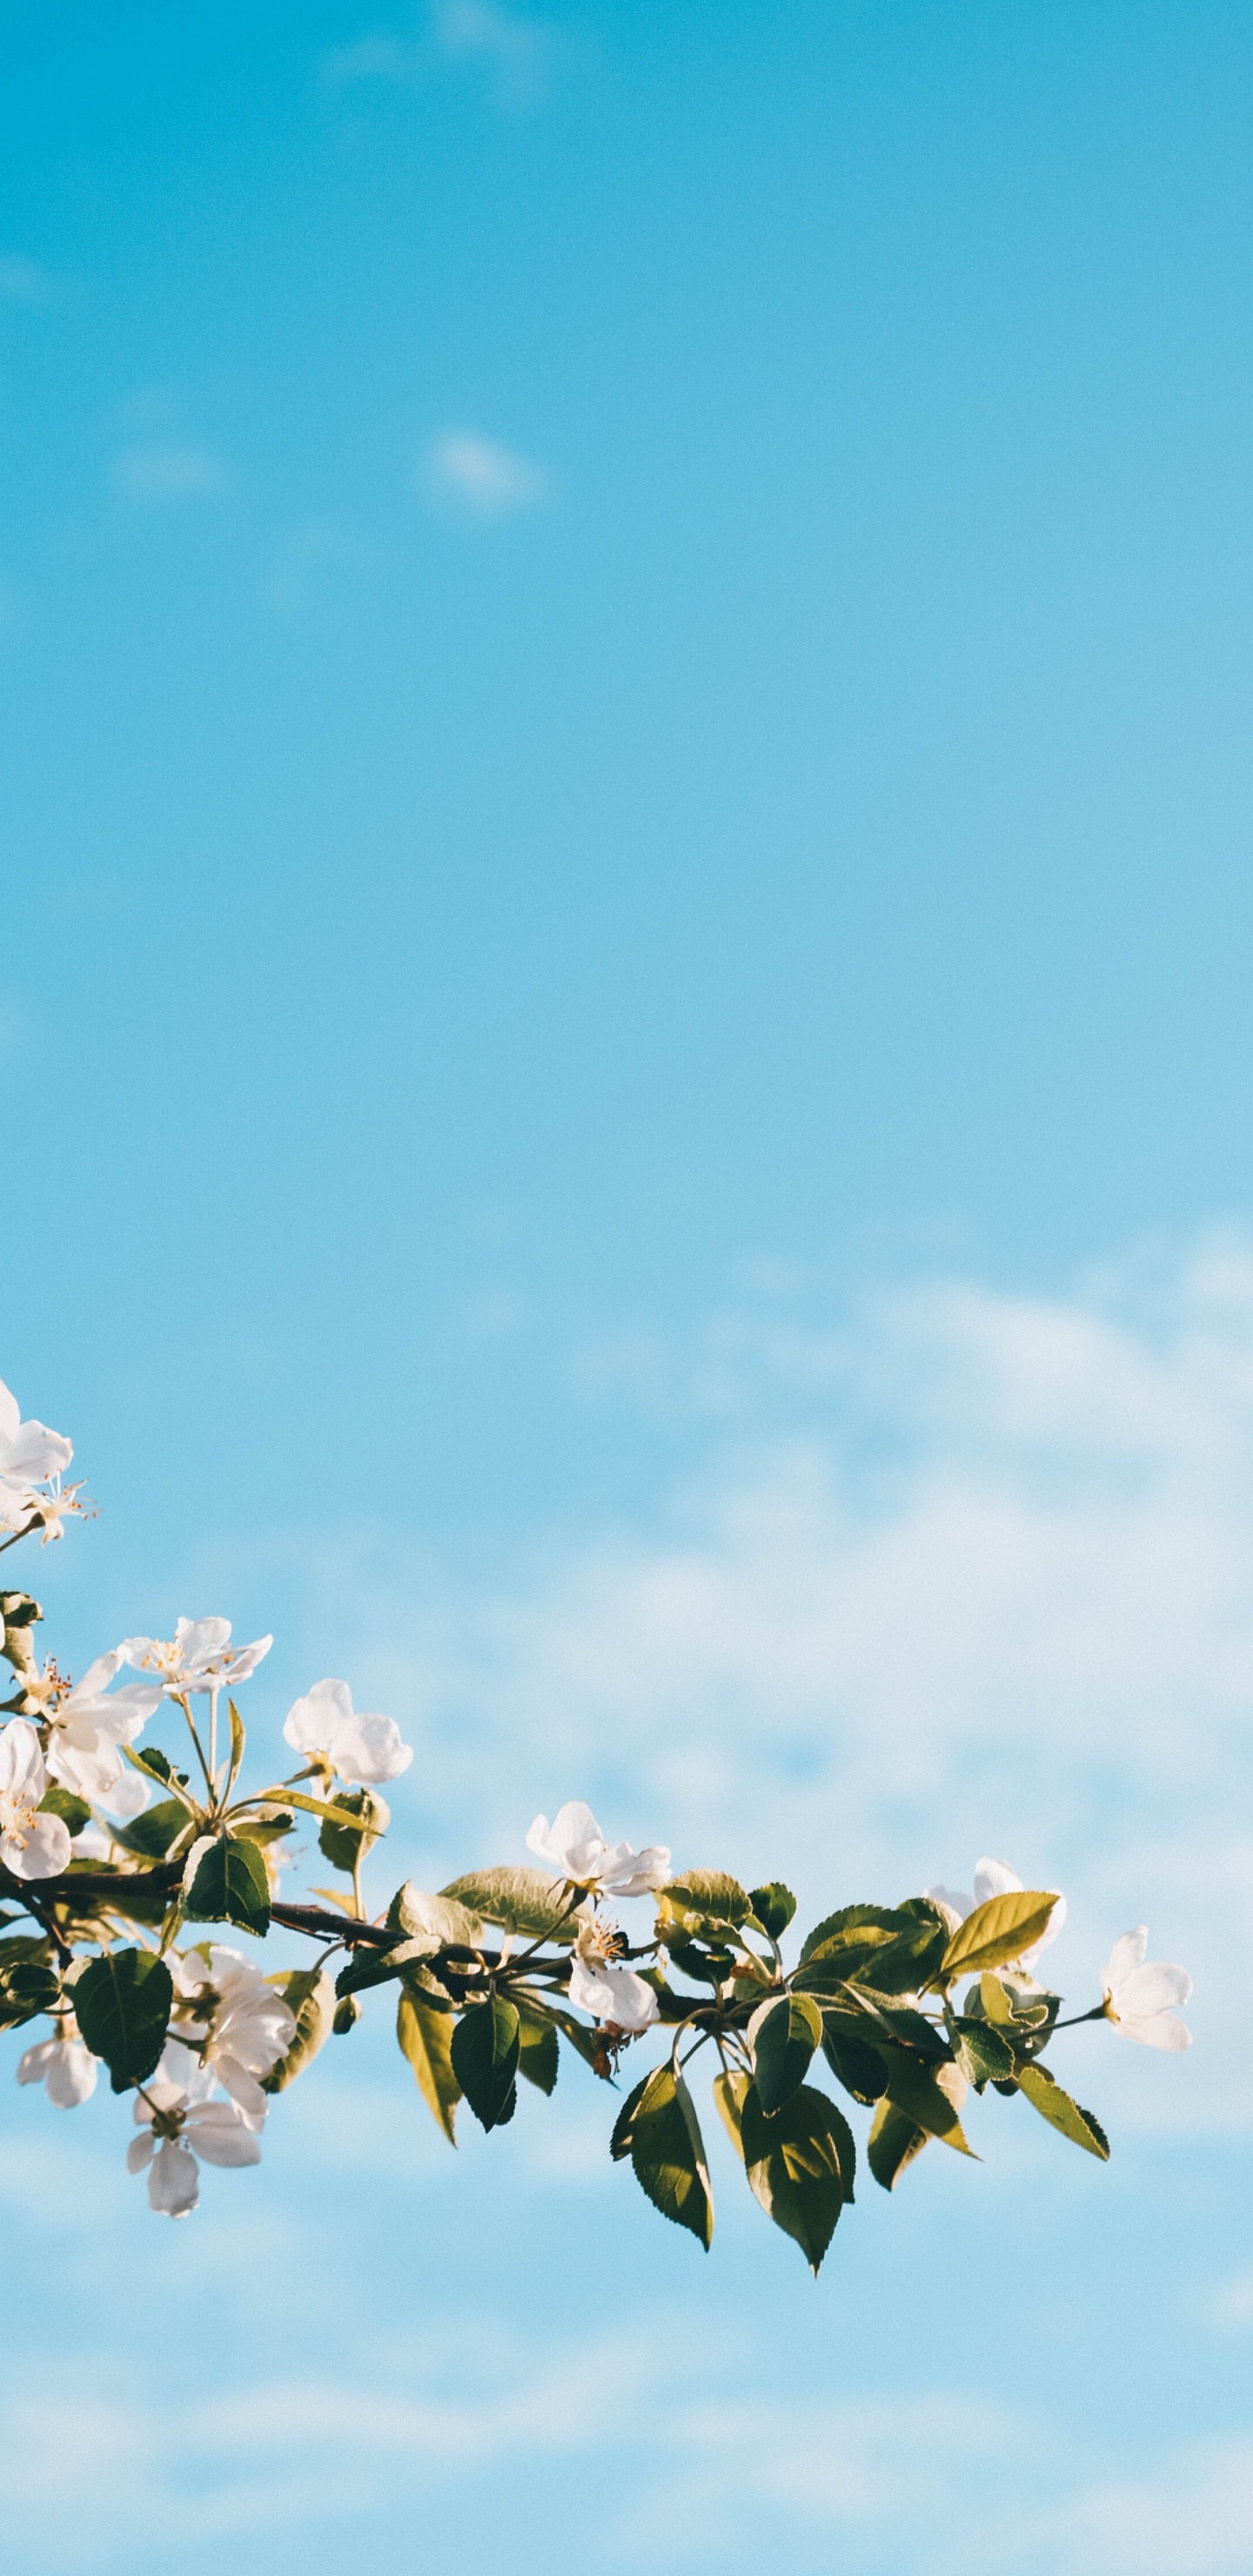 White Cherry Blossom Under Blue Sky During Daytime. Wallpaper in 1440x2960 Resolution